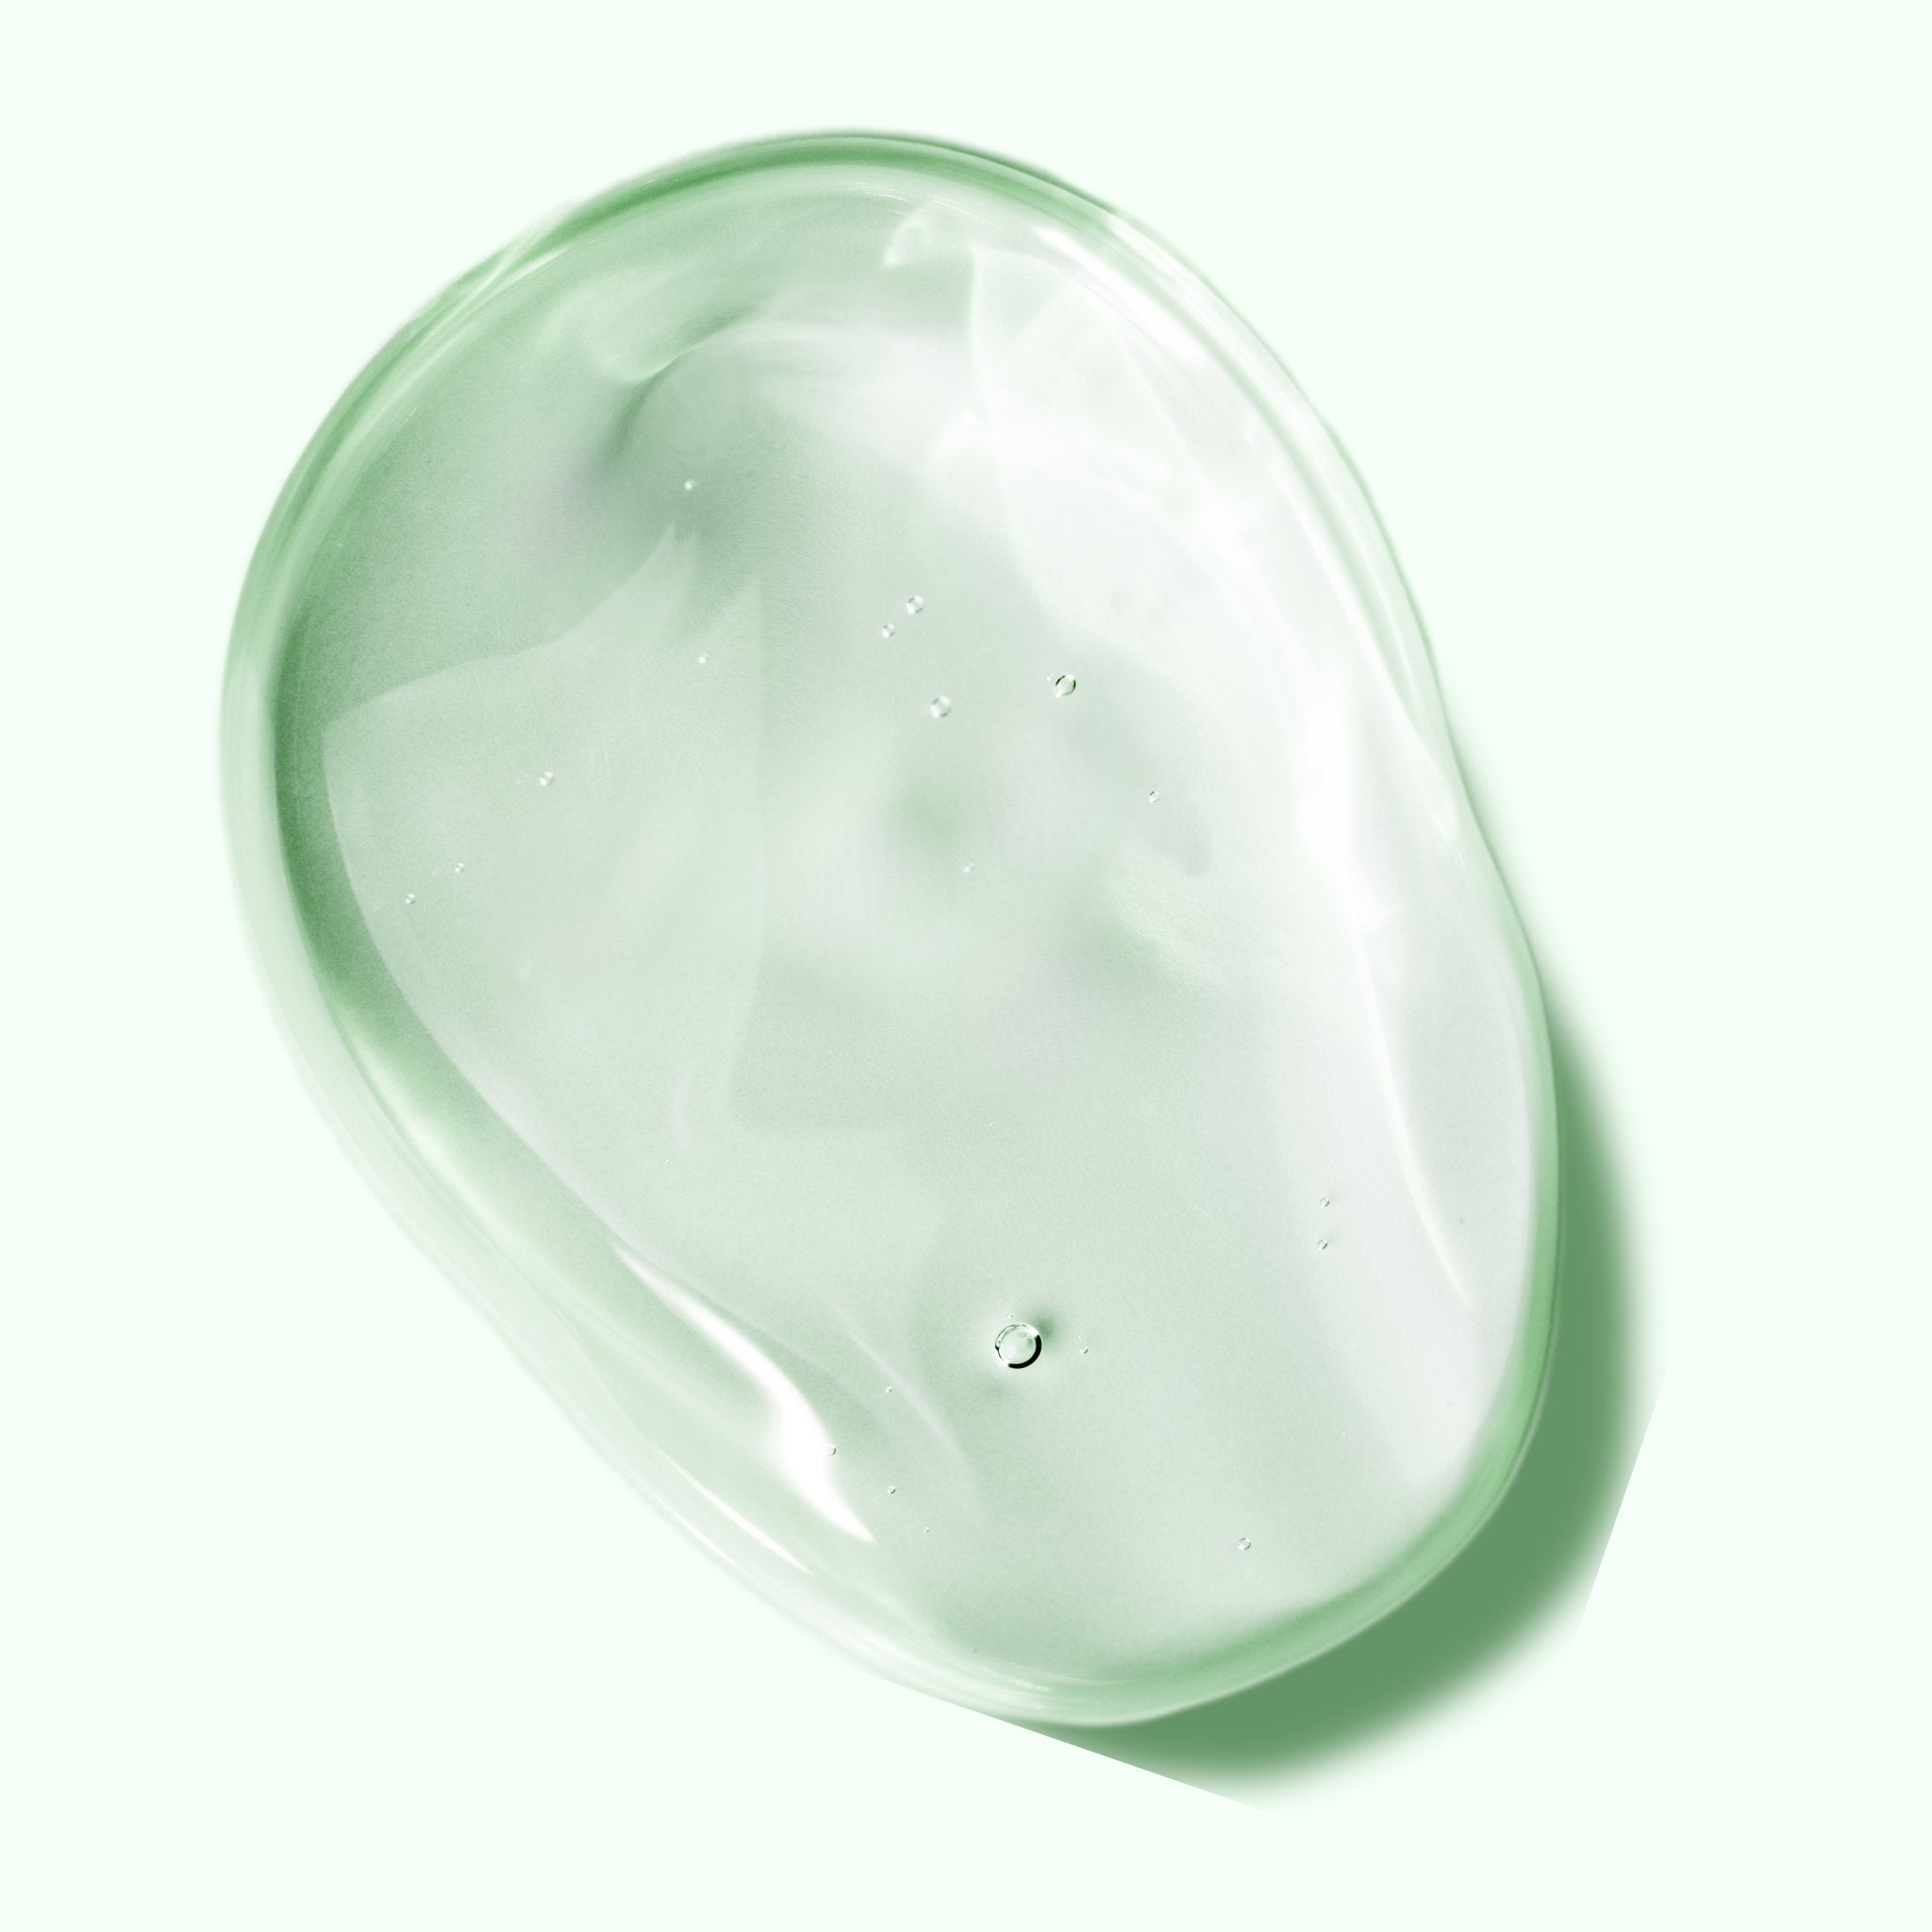 Skin Gel | Original - Nature's Aid, aloe gel, hand sanitizer